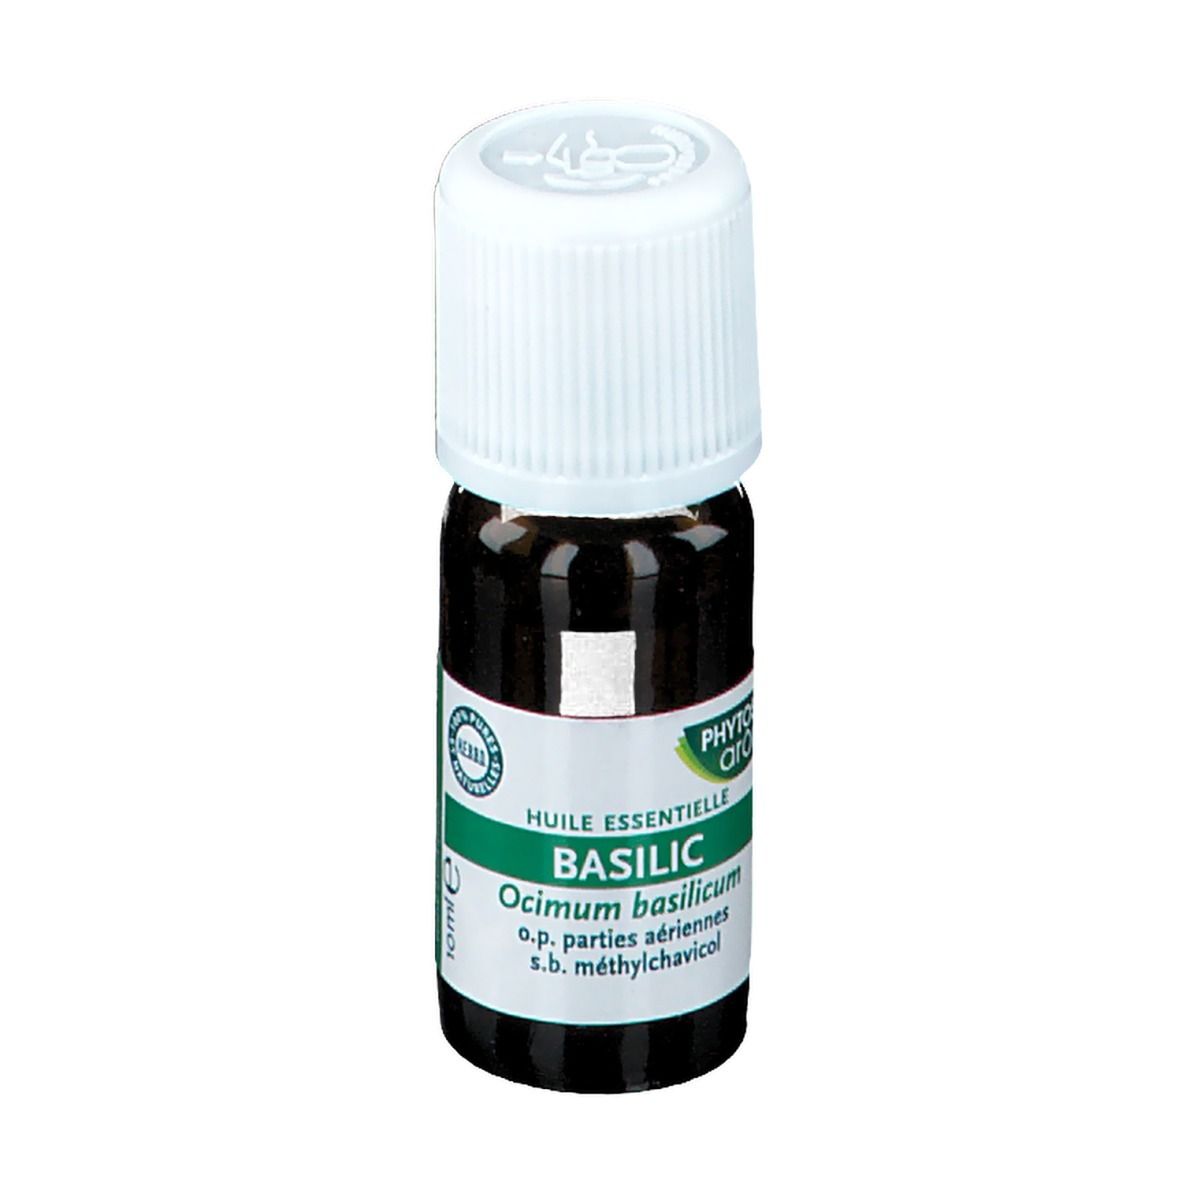 Phytosun Aroms huile essentielle basilic